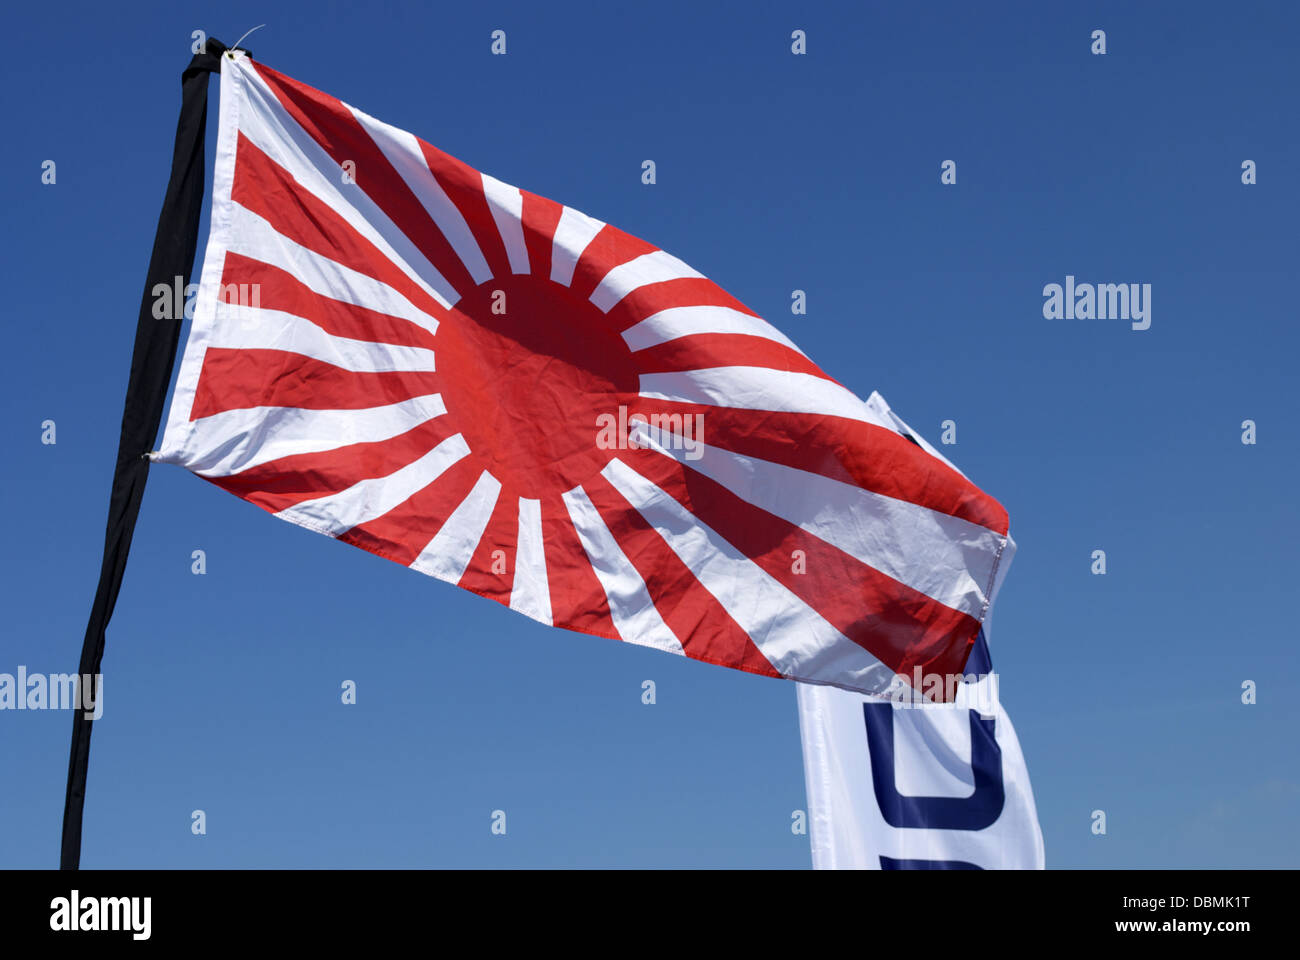 japanese flag waving on blue sky Stock Photo